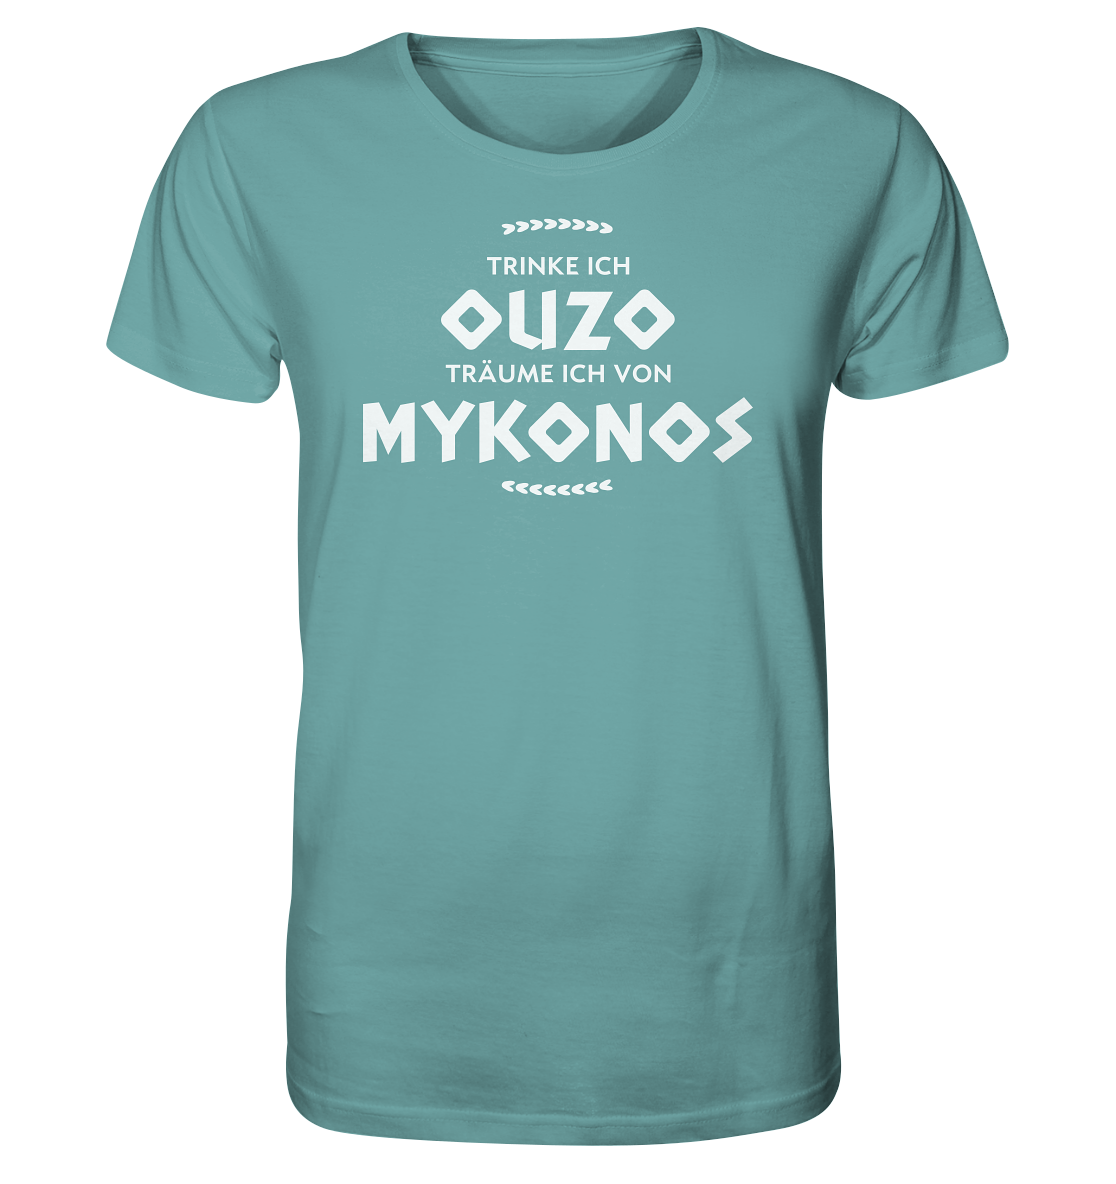 When I drink Ouzo I dream of Mykonos - Organic Shirt